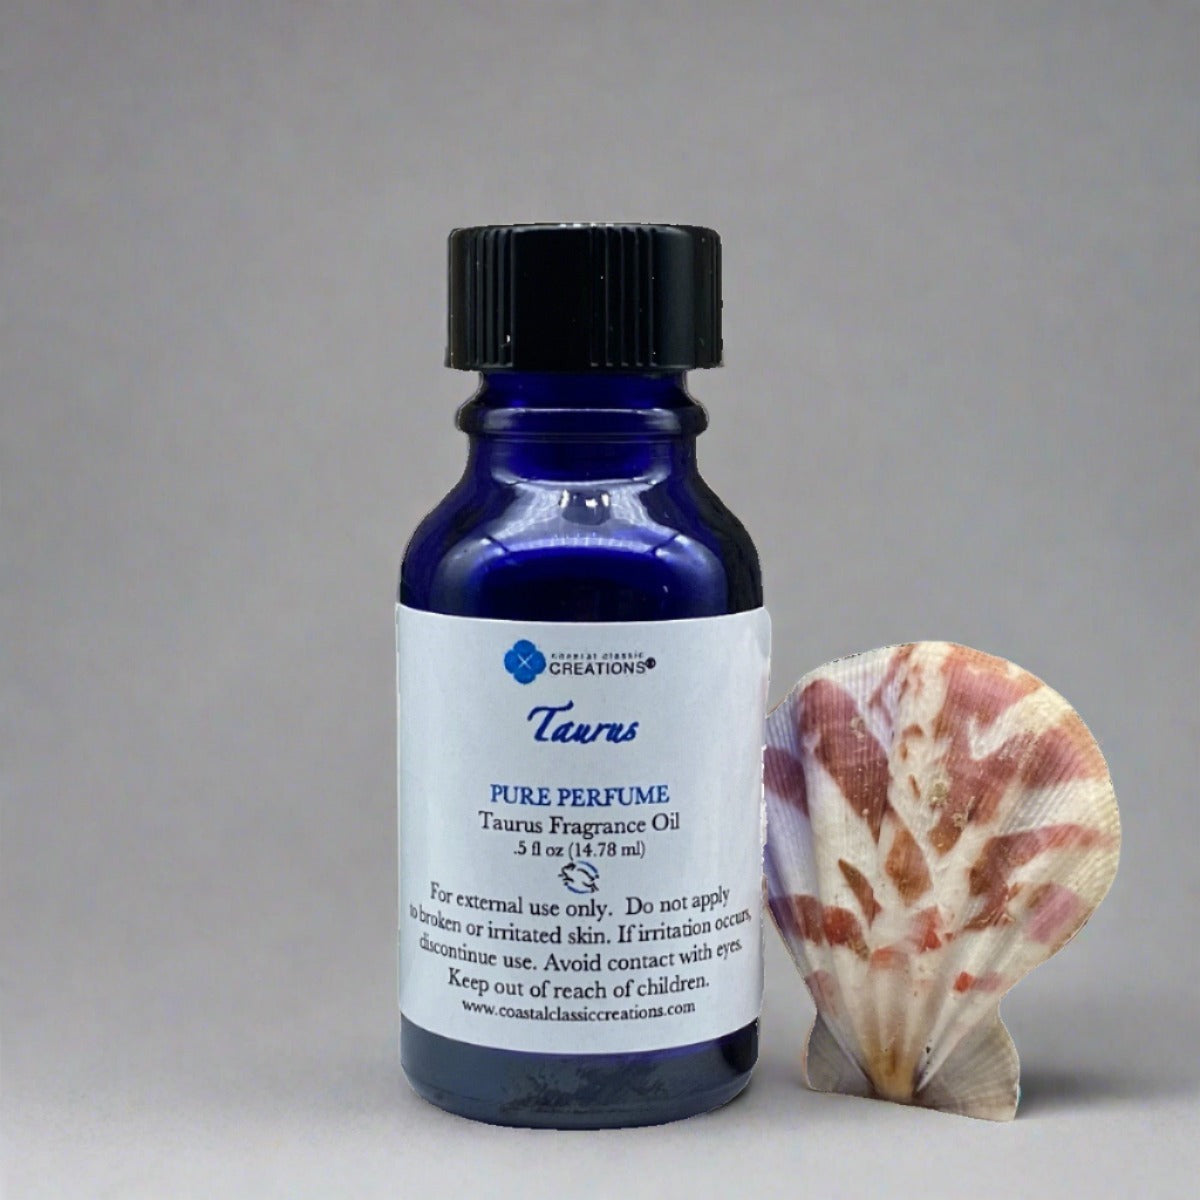 Taurus Perfume, an aromatic floral & herbal blend